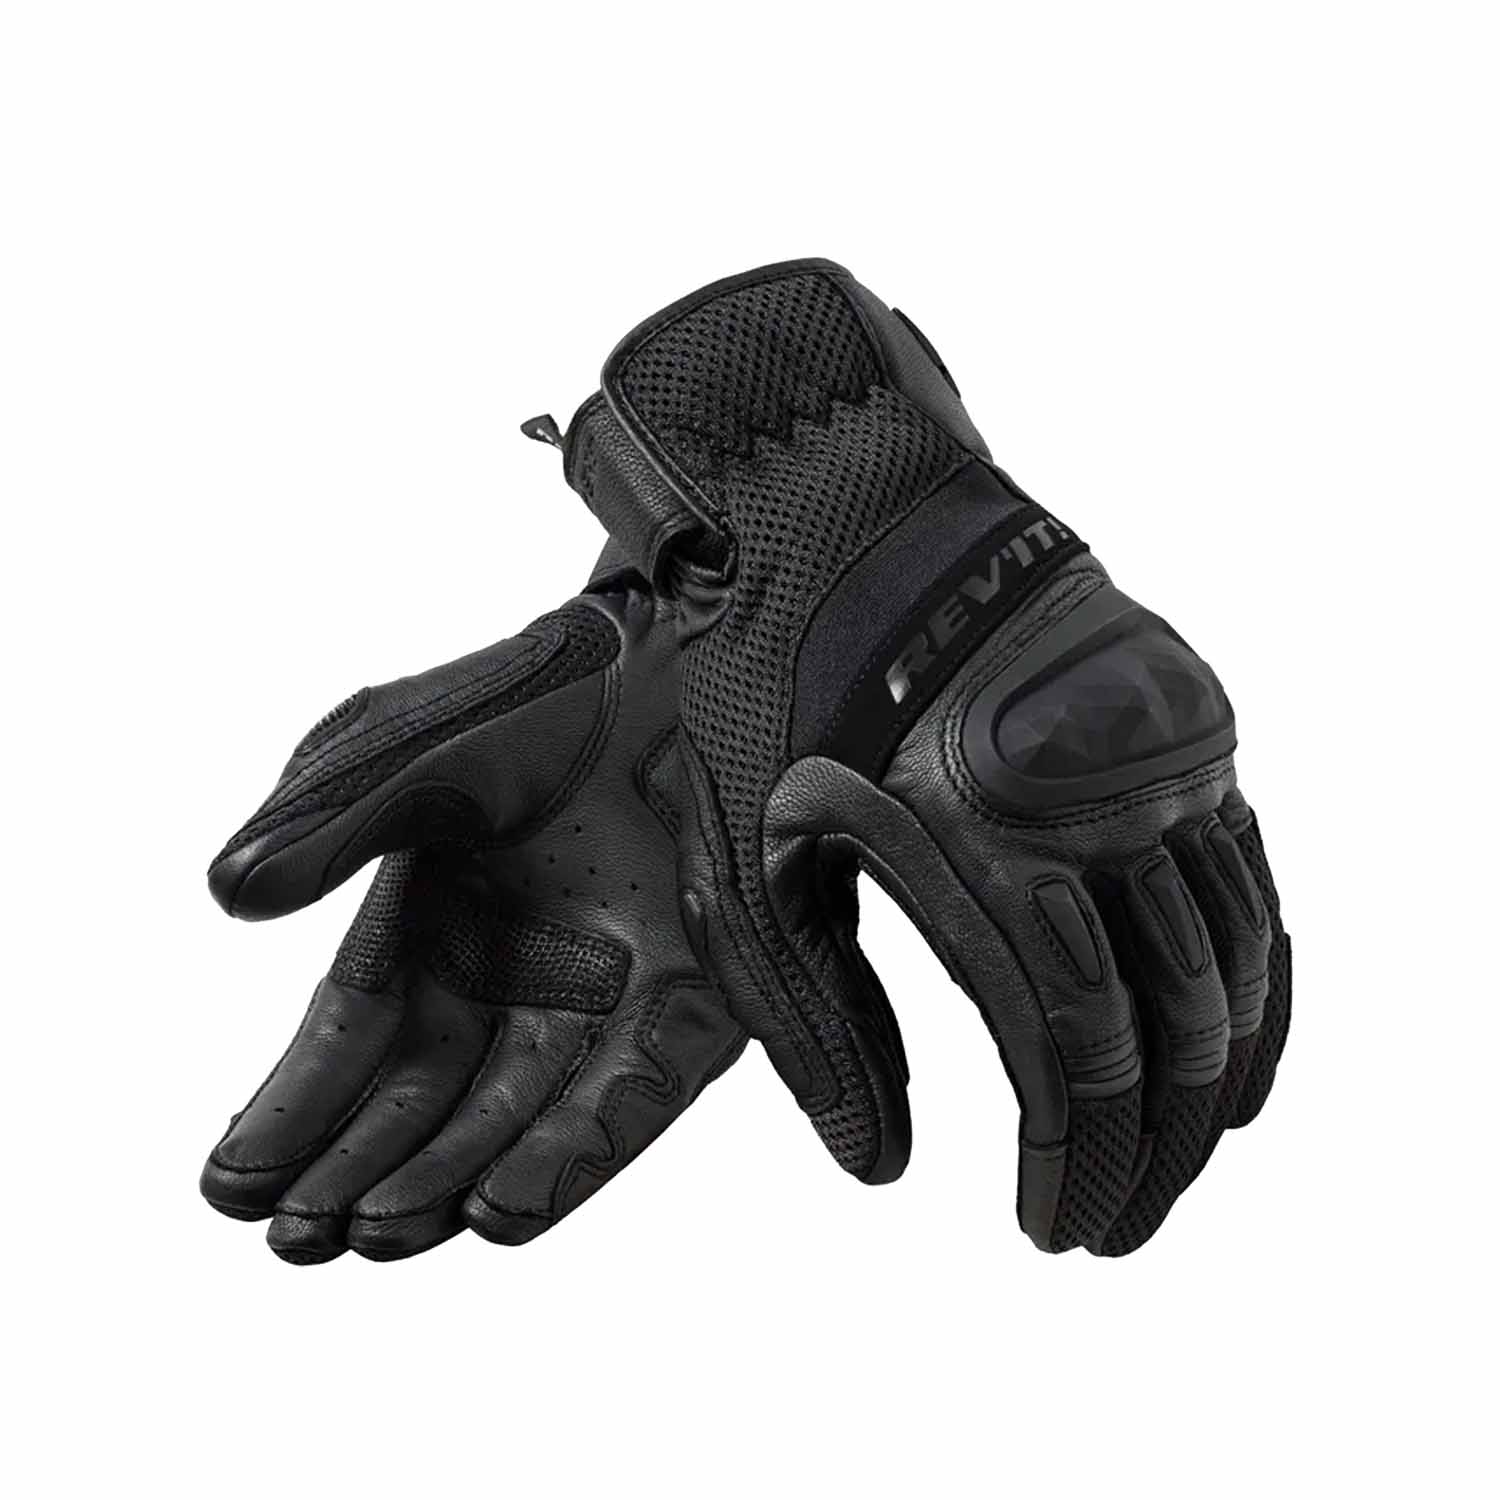 Image of REV'IT! Dirt 4 Gloves Black Size M ID 8700001383394